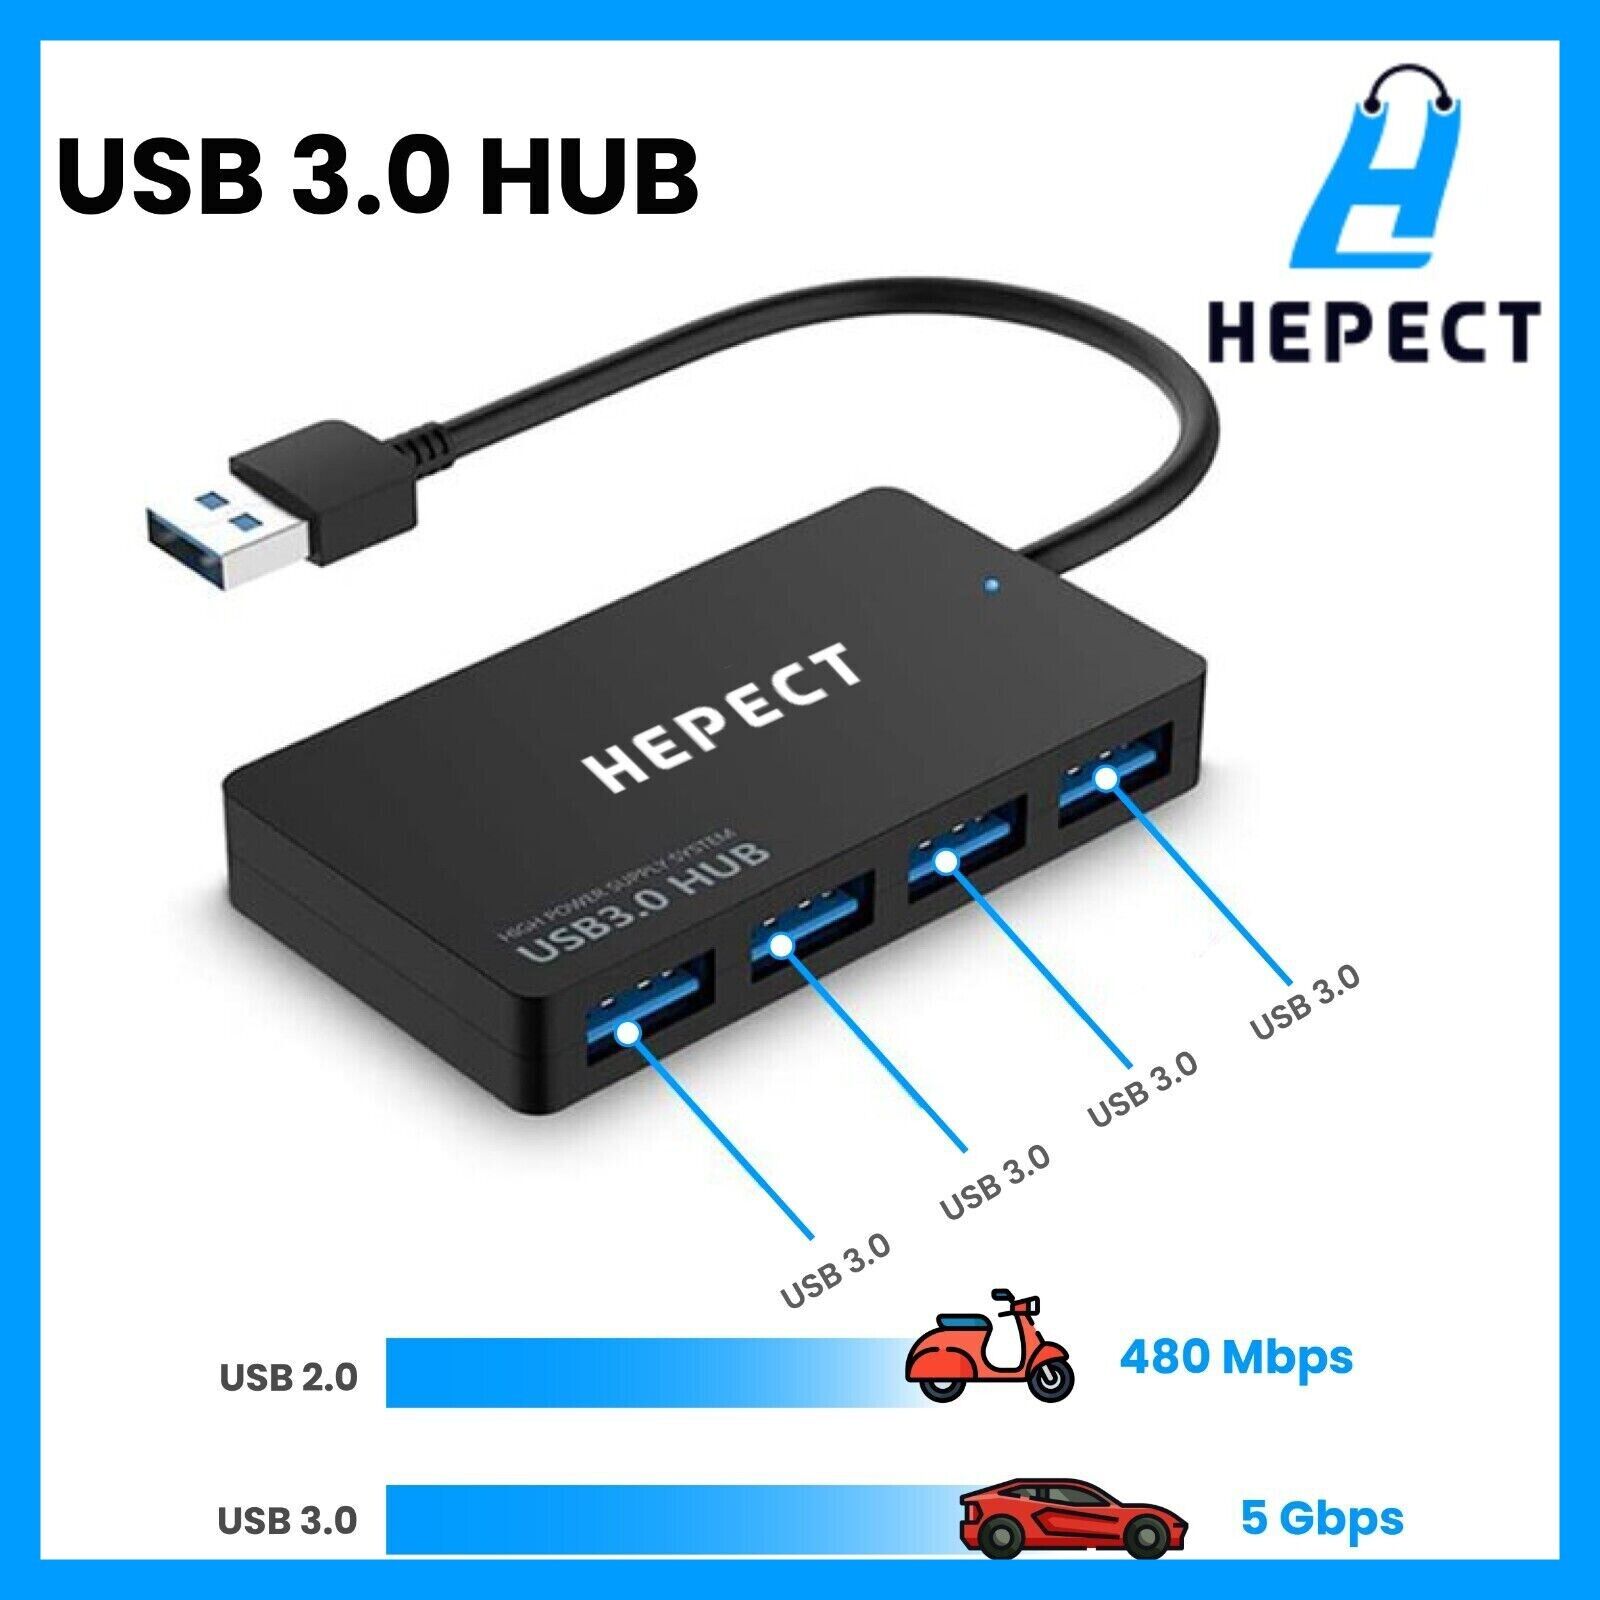 USB 3.0 Hub 4-Port Adapter Charger Data Super Speed for PC Mac Laptop Desktop